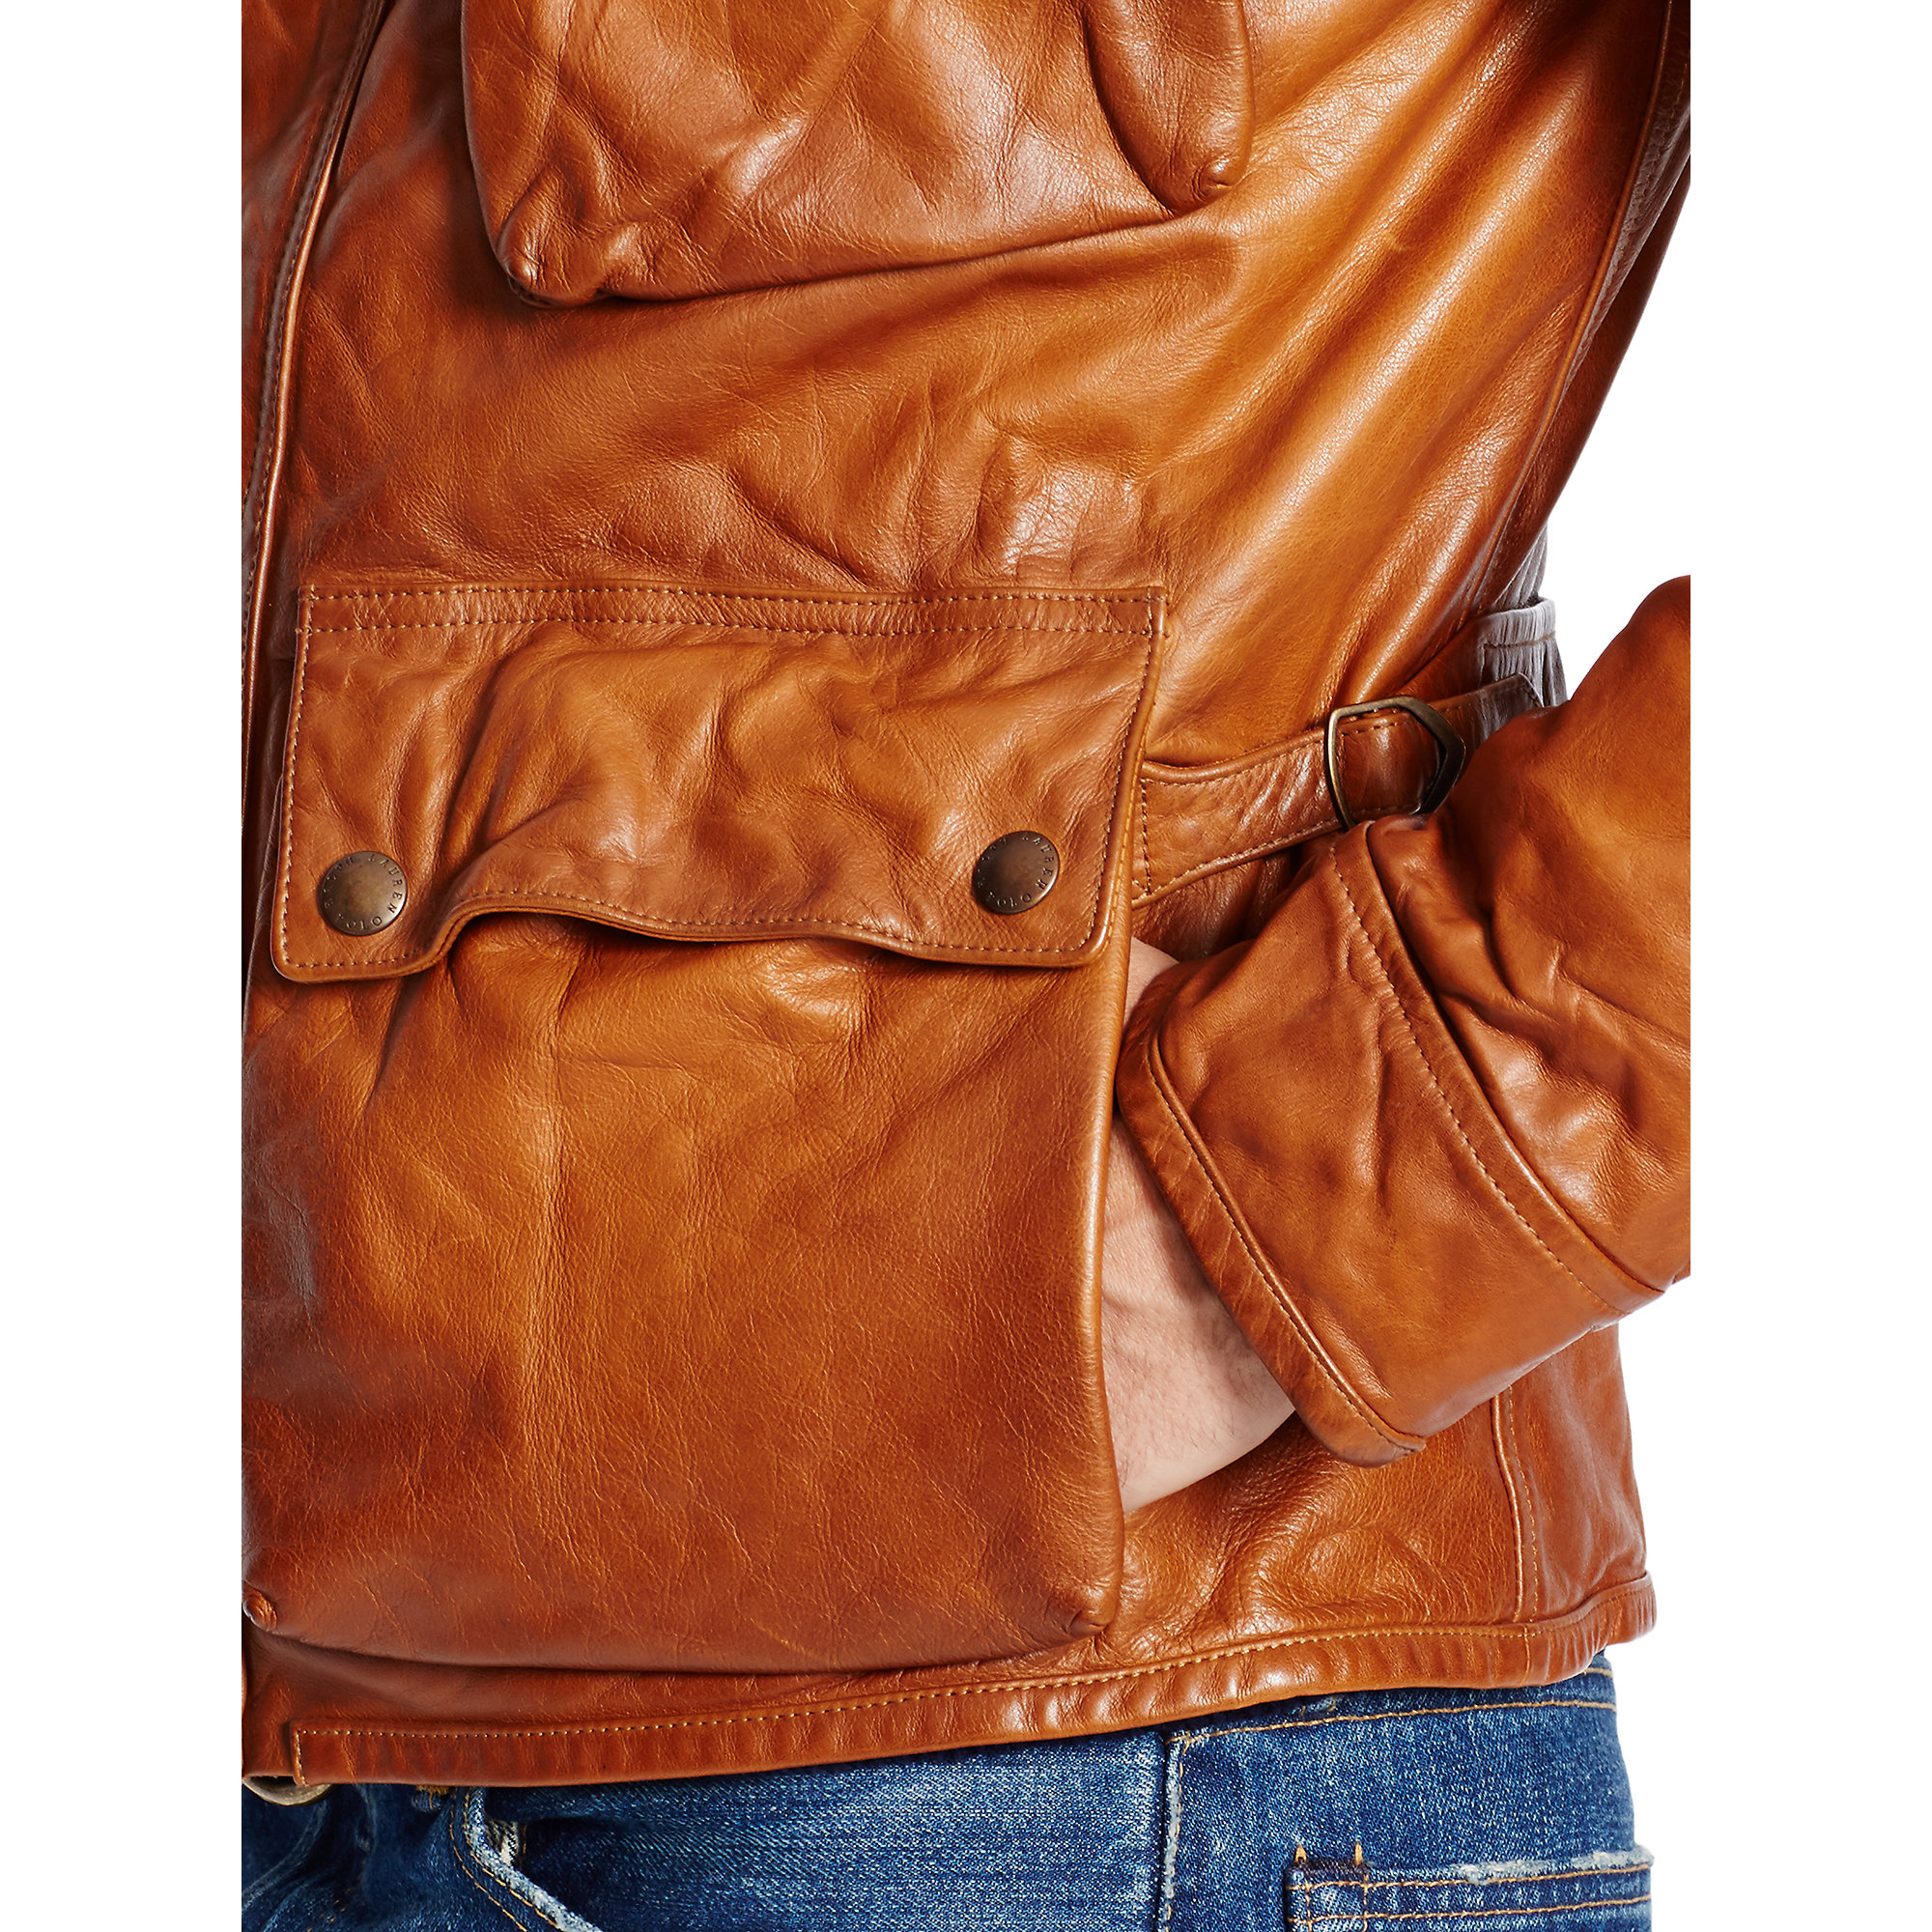 Polo Ralph Lauren Southbury Leather Biker Jacket in Brown for Men - Lyst